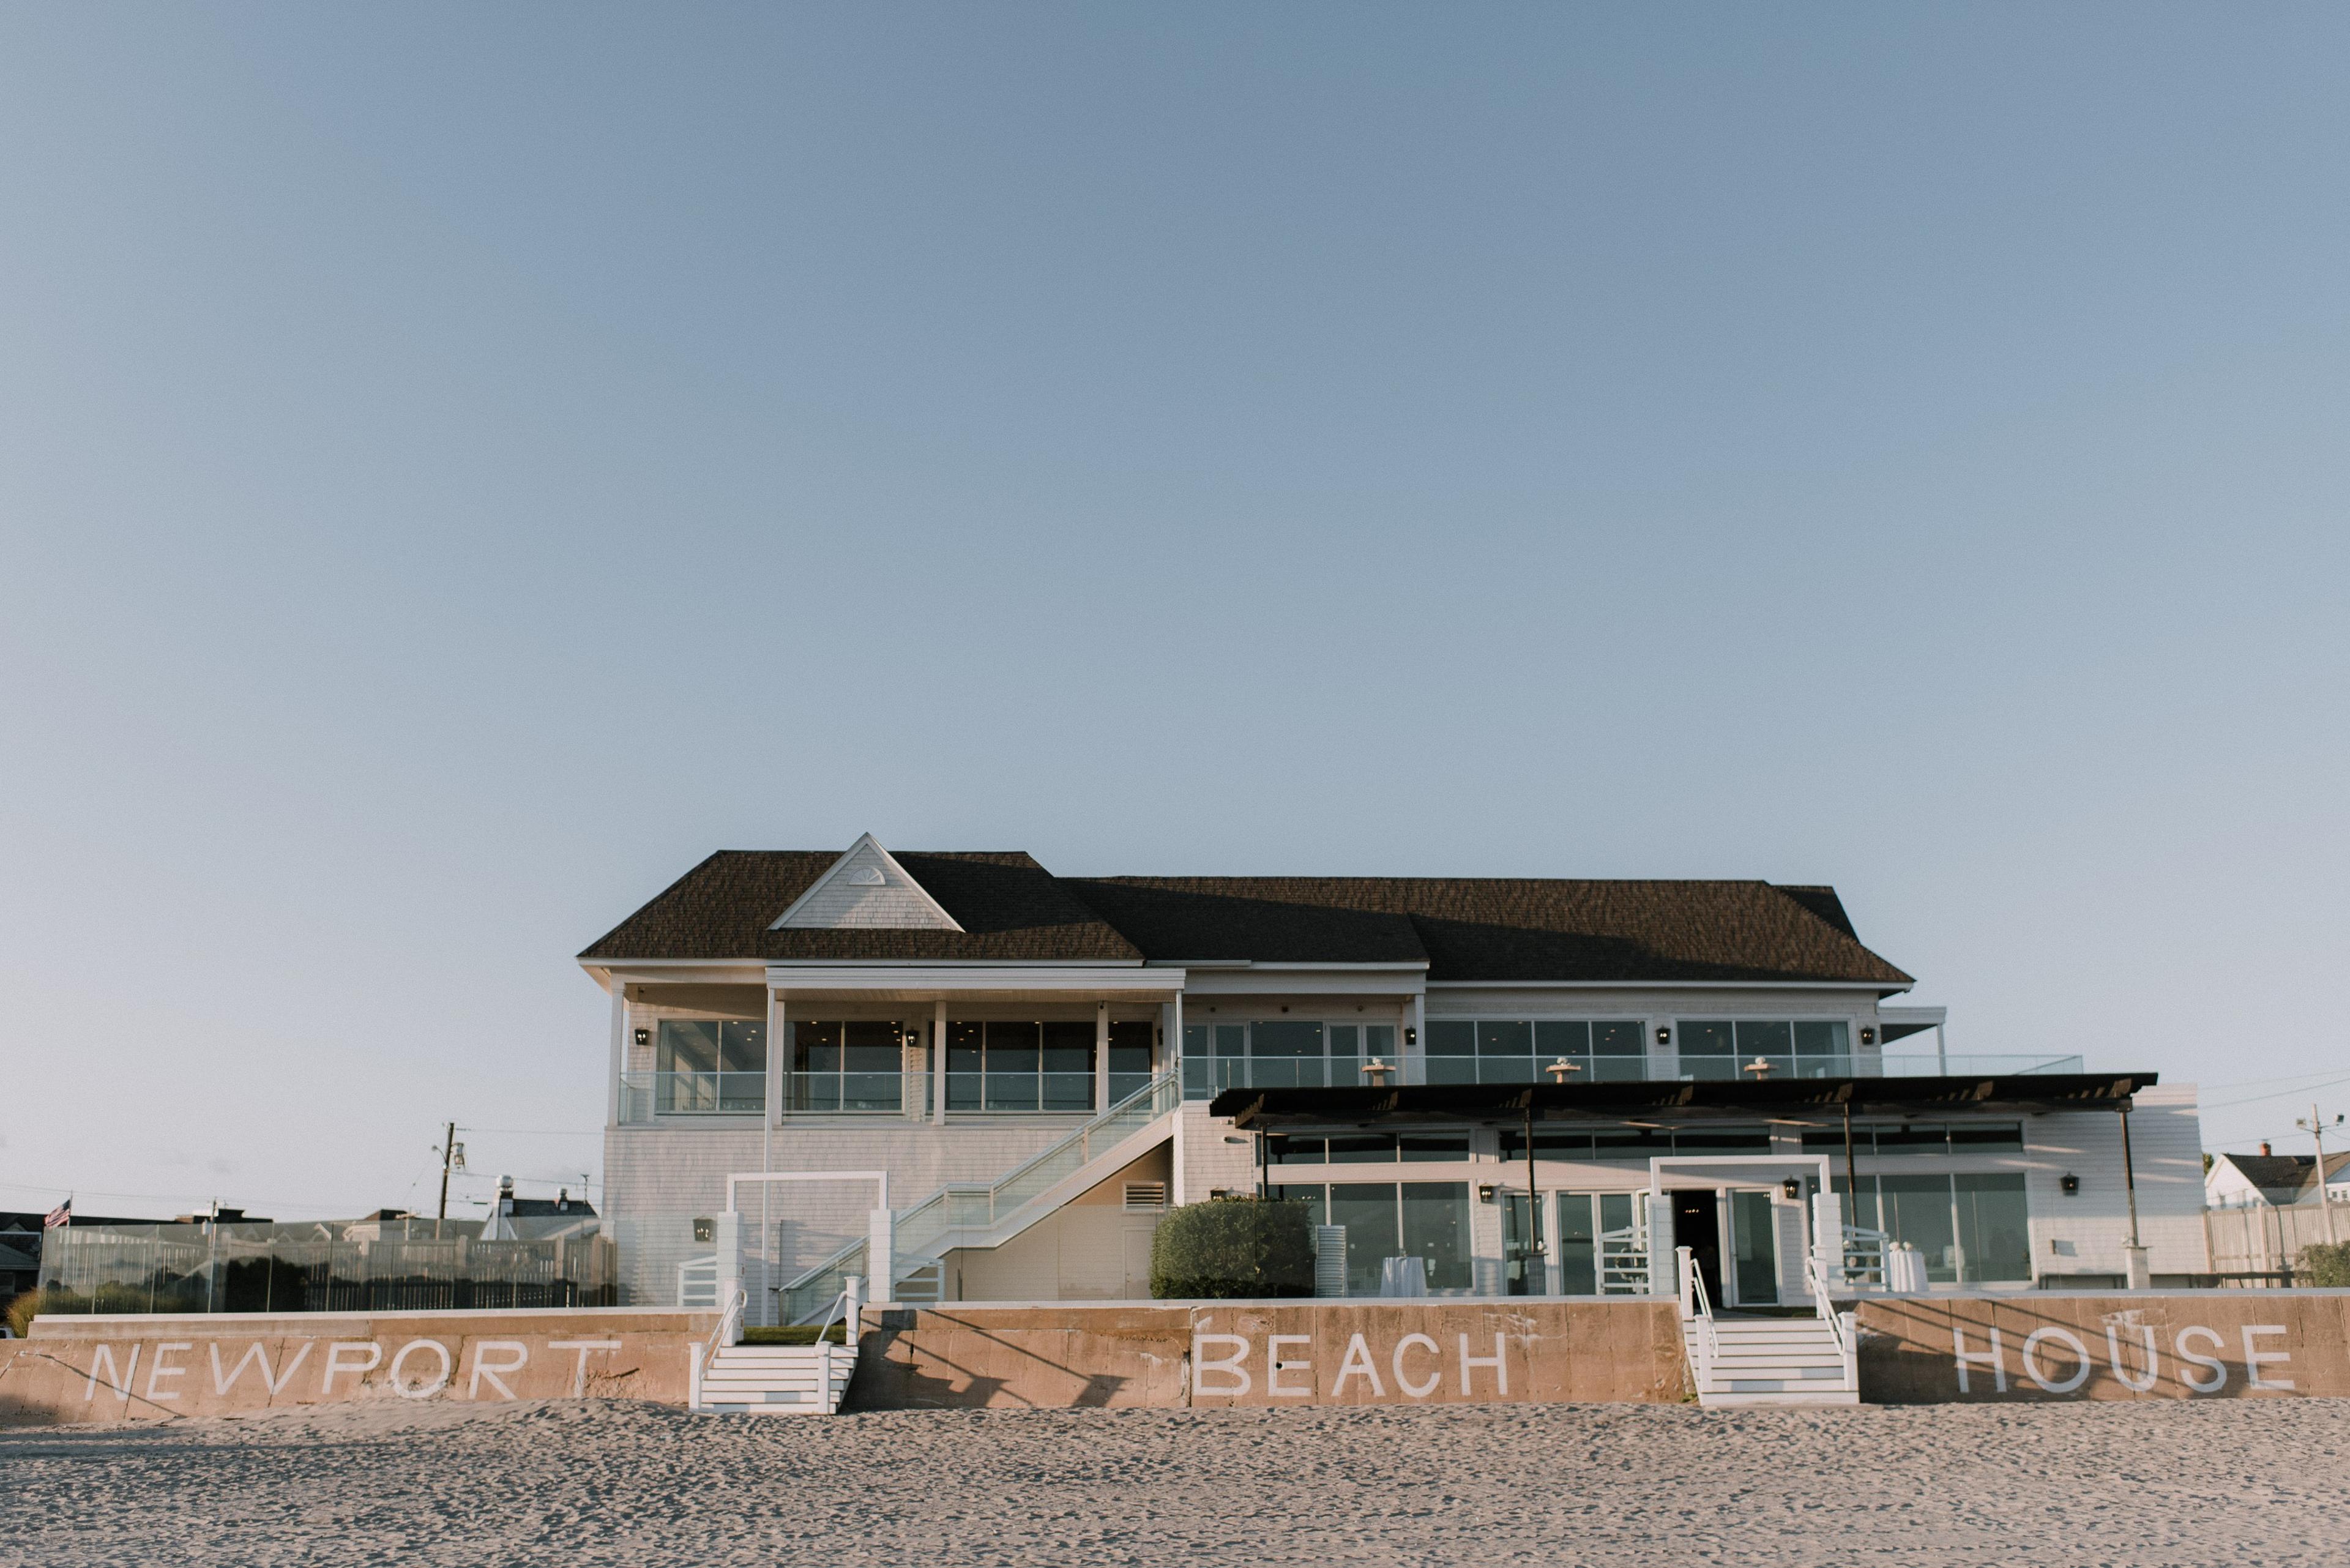 Newport Beach House: A Longwood Venue